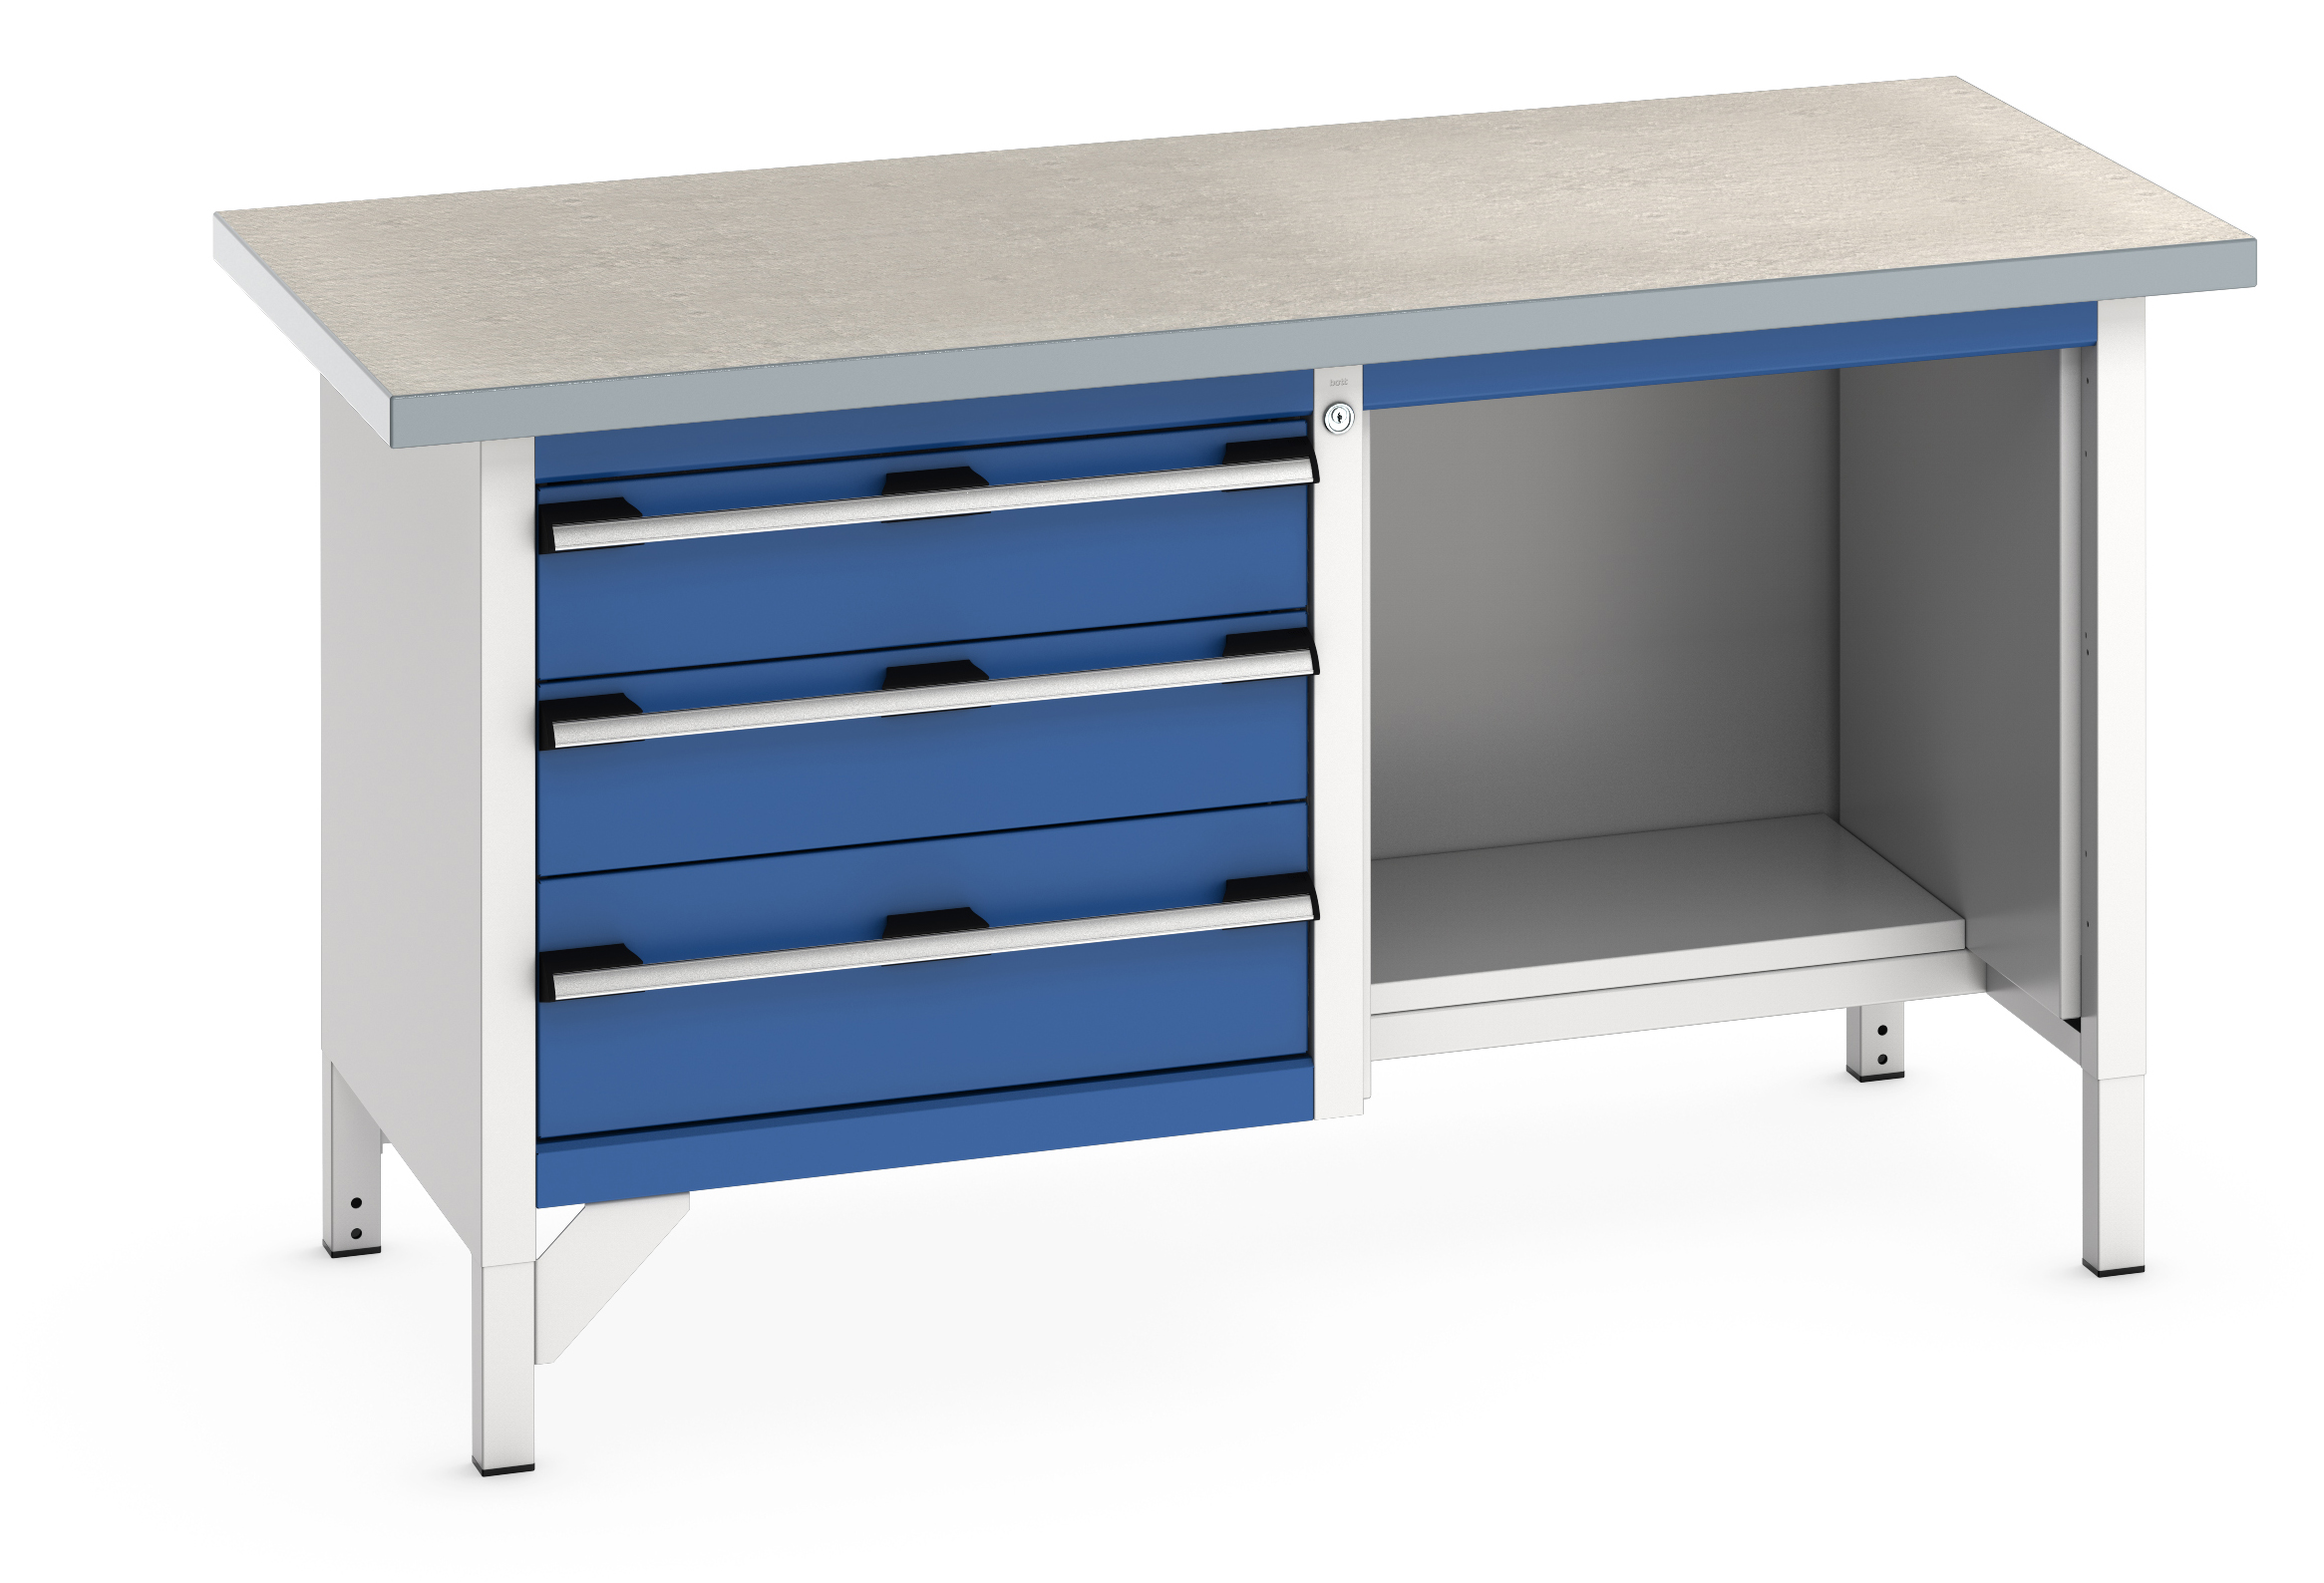 Bott Cubio Storage Bench With 3 Drawer Cabinet / Open With Half Depth Base Shelf - 41002042.11V